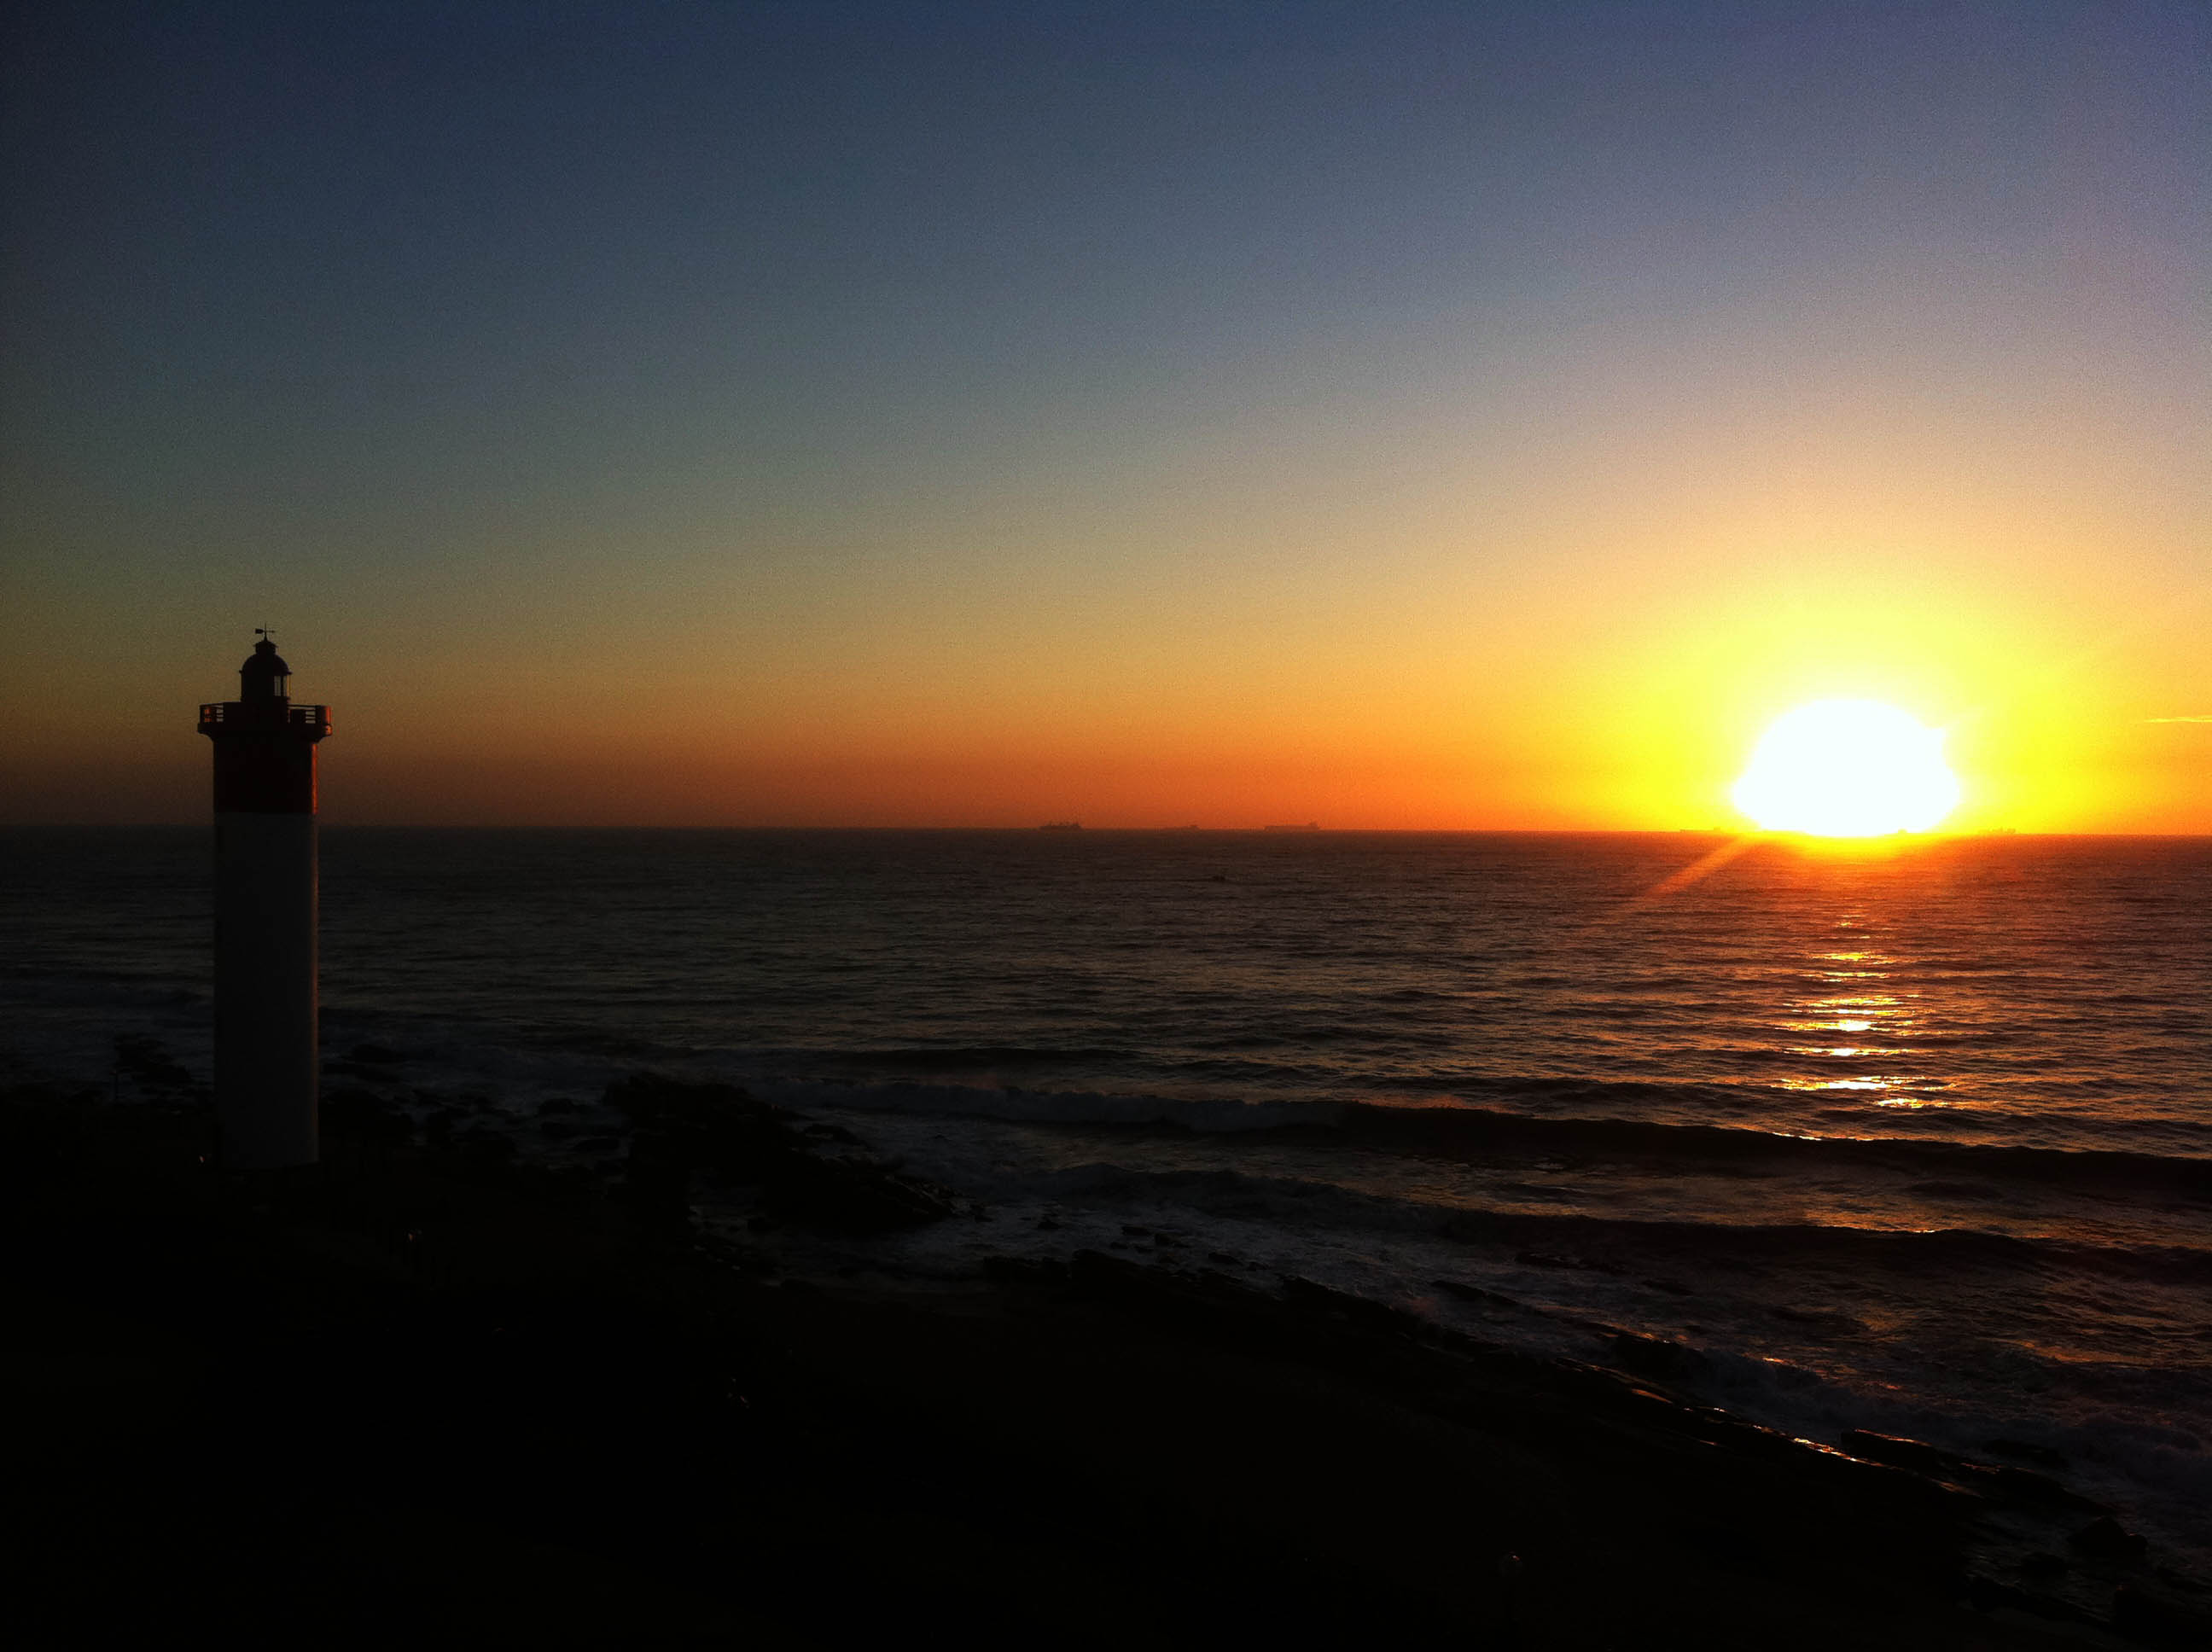 Sunrise in Durban, South Africa